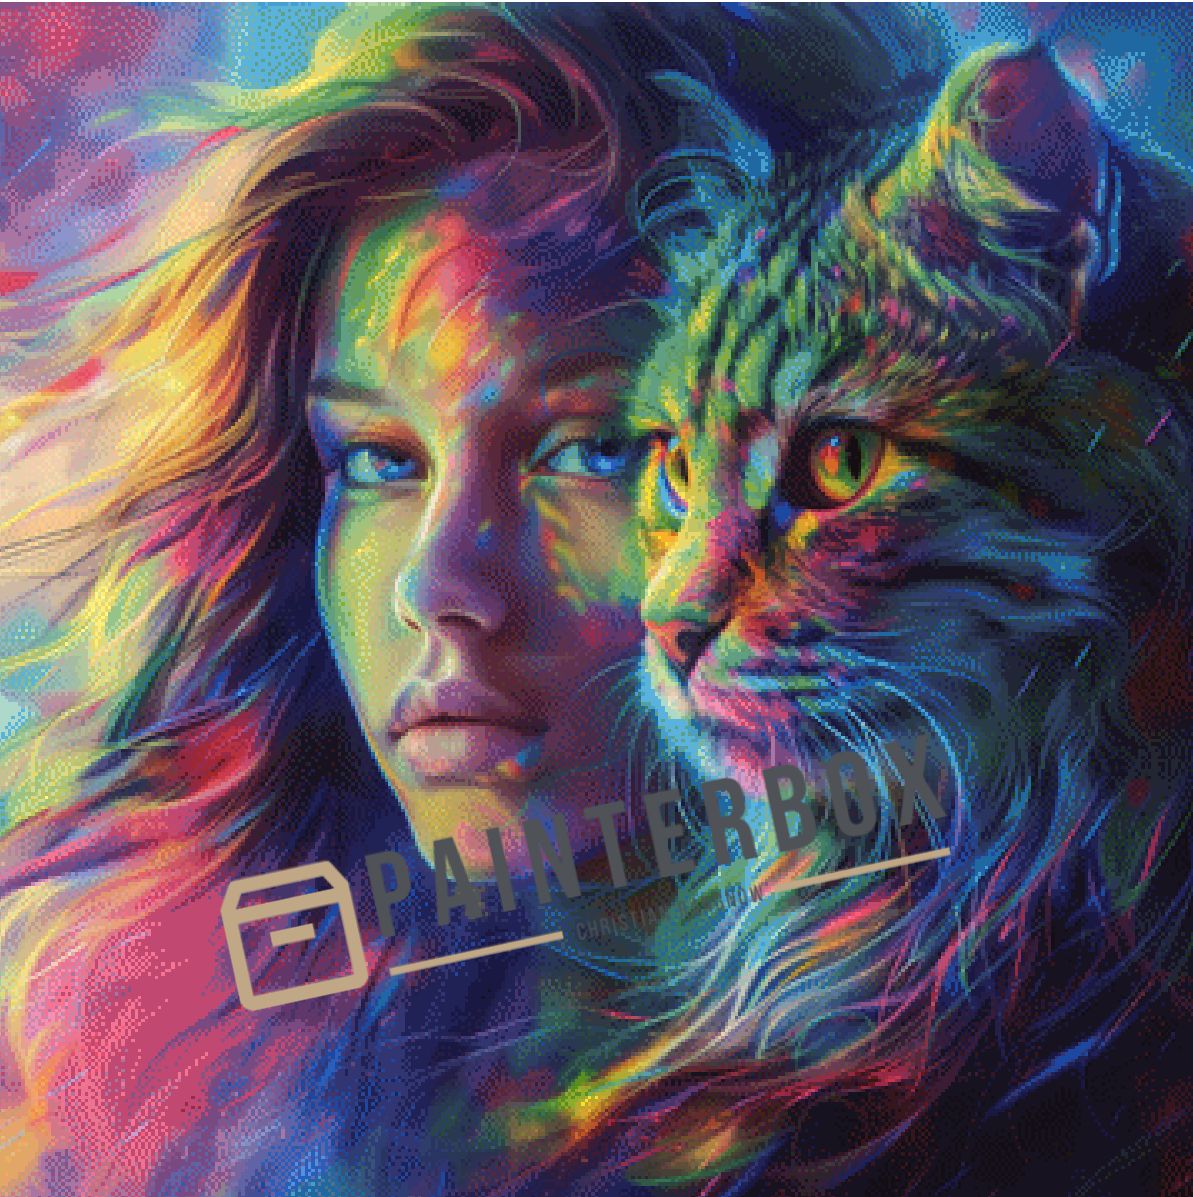 Colorful Cat Love by ArtRosa - 300 Farben